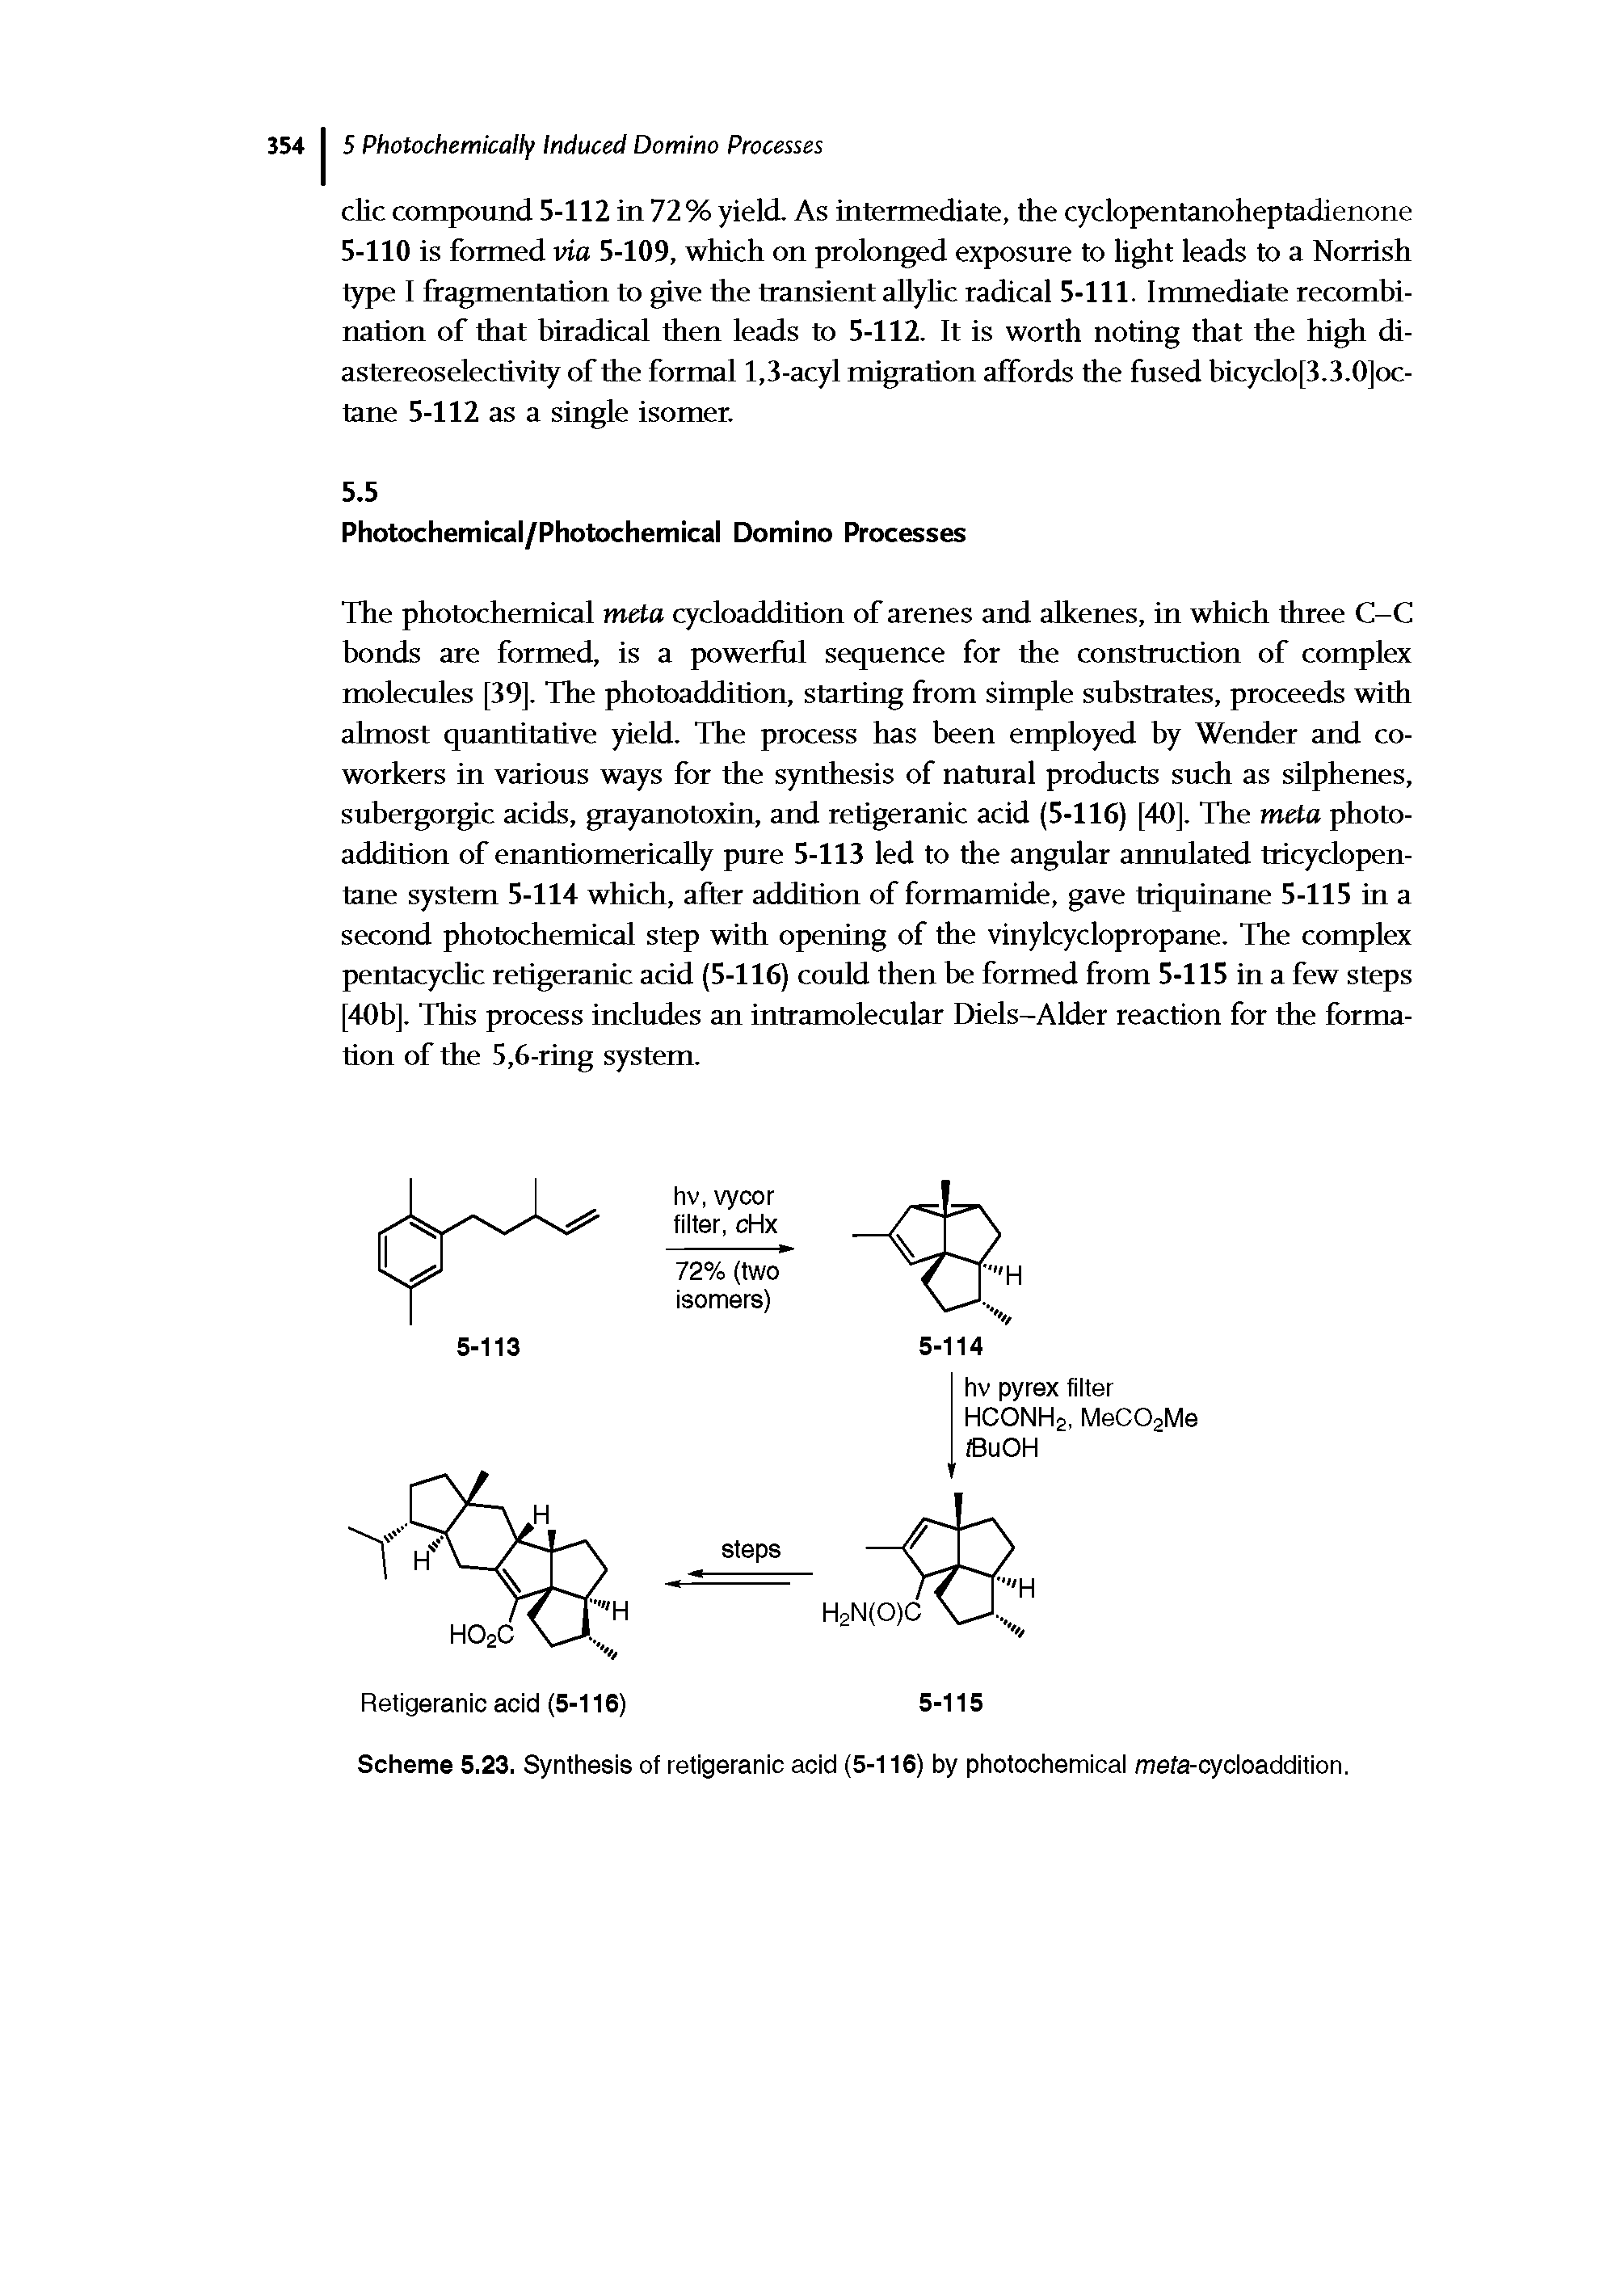 Scheme 5.23. Synthesis of retigeranic acid (5-116) by photochemical mefa-cycloaddition.